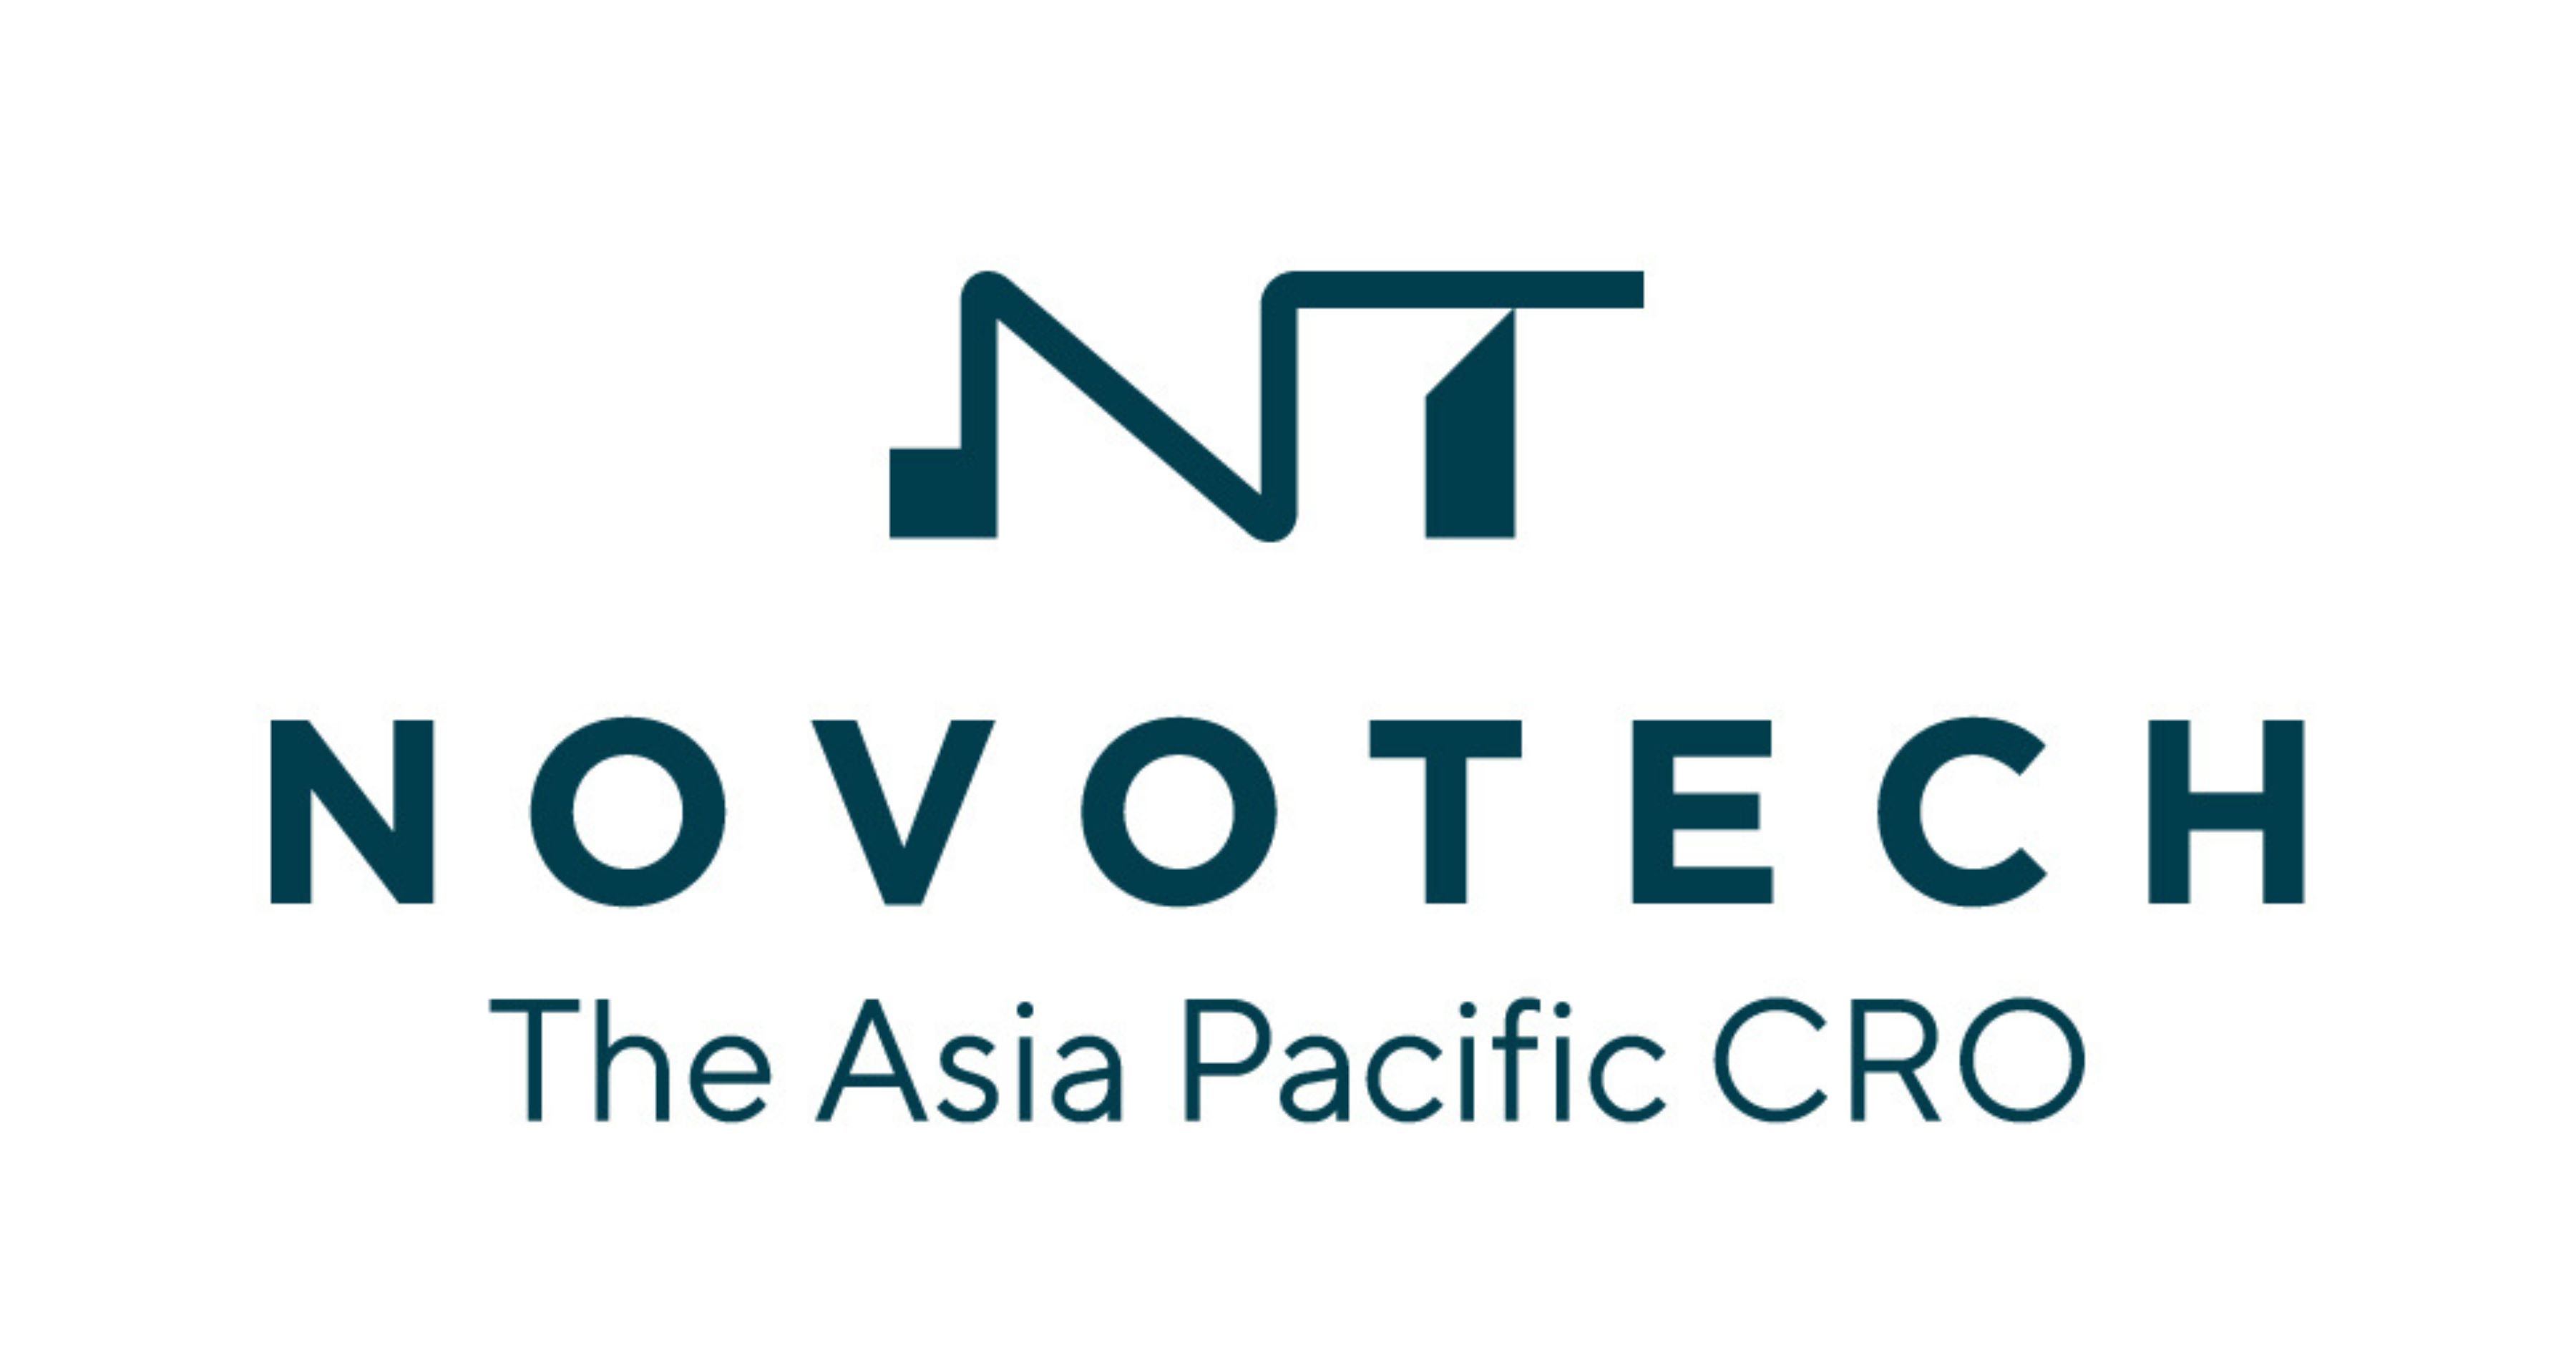 Novotech 为 2023 年 ASCO 大会提供赞助：与 eChina Health 合办肿瘤峰会，并与 Endpoints 共同召开药物加速开发专家组讨论